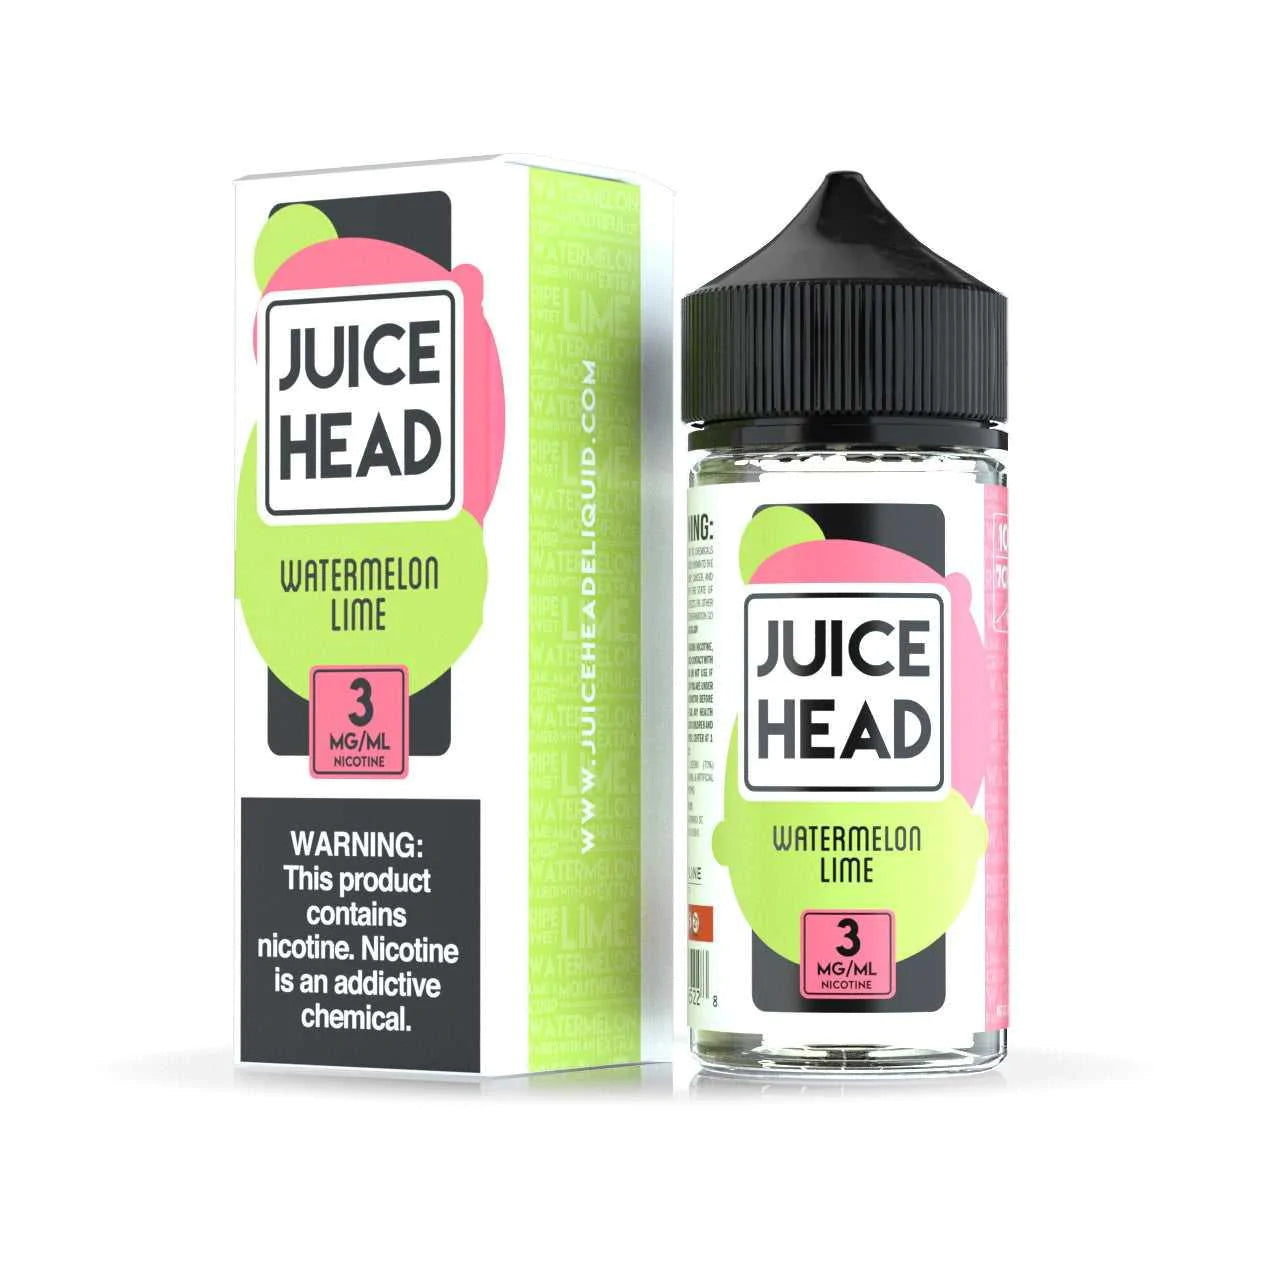 Juice Head: Watermelon Lime